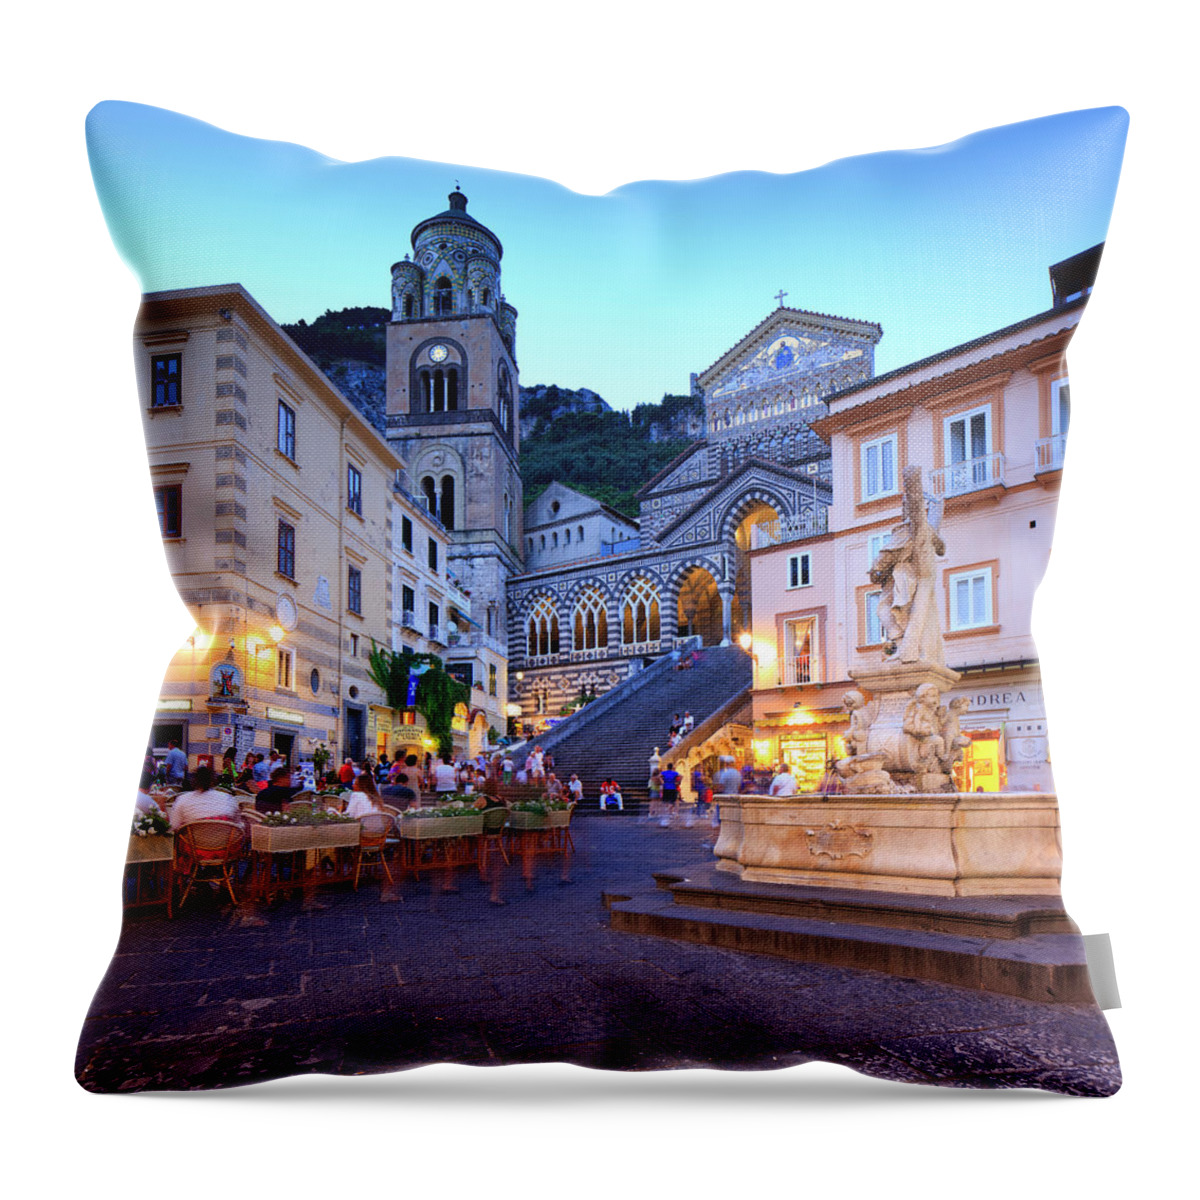 Estock Throw Pillow featuring the digital art Piazza Del Duomo, Italy by Maurizio Rellini